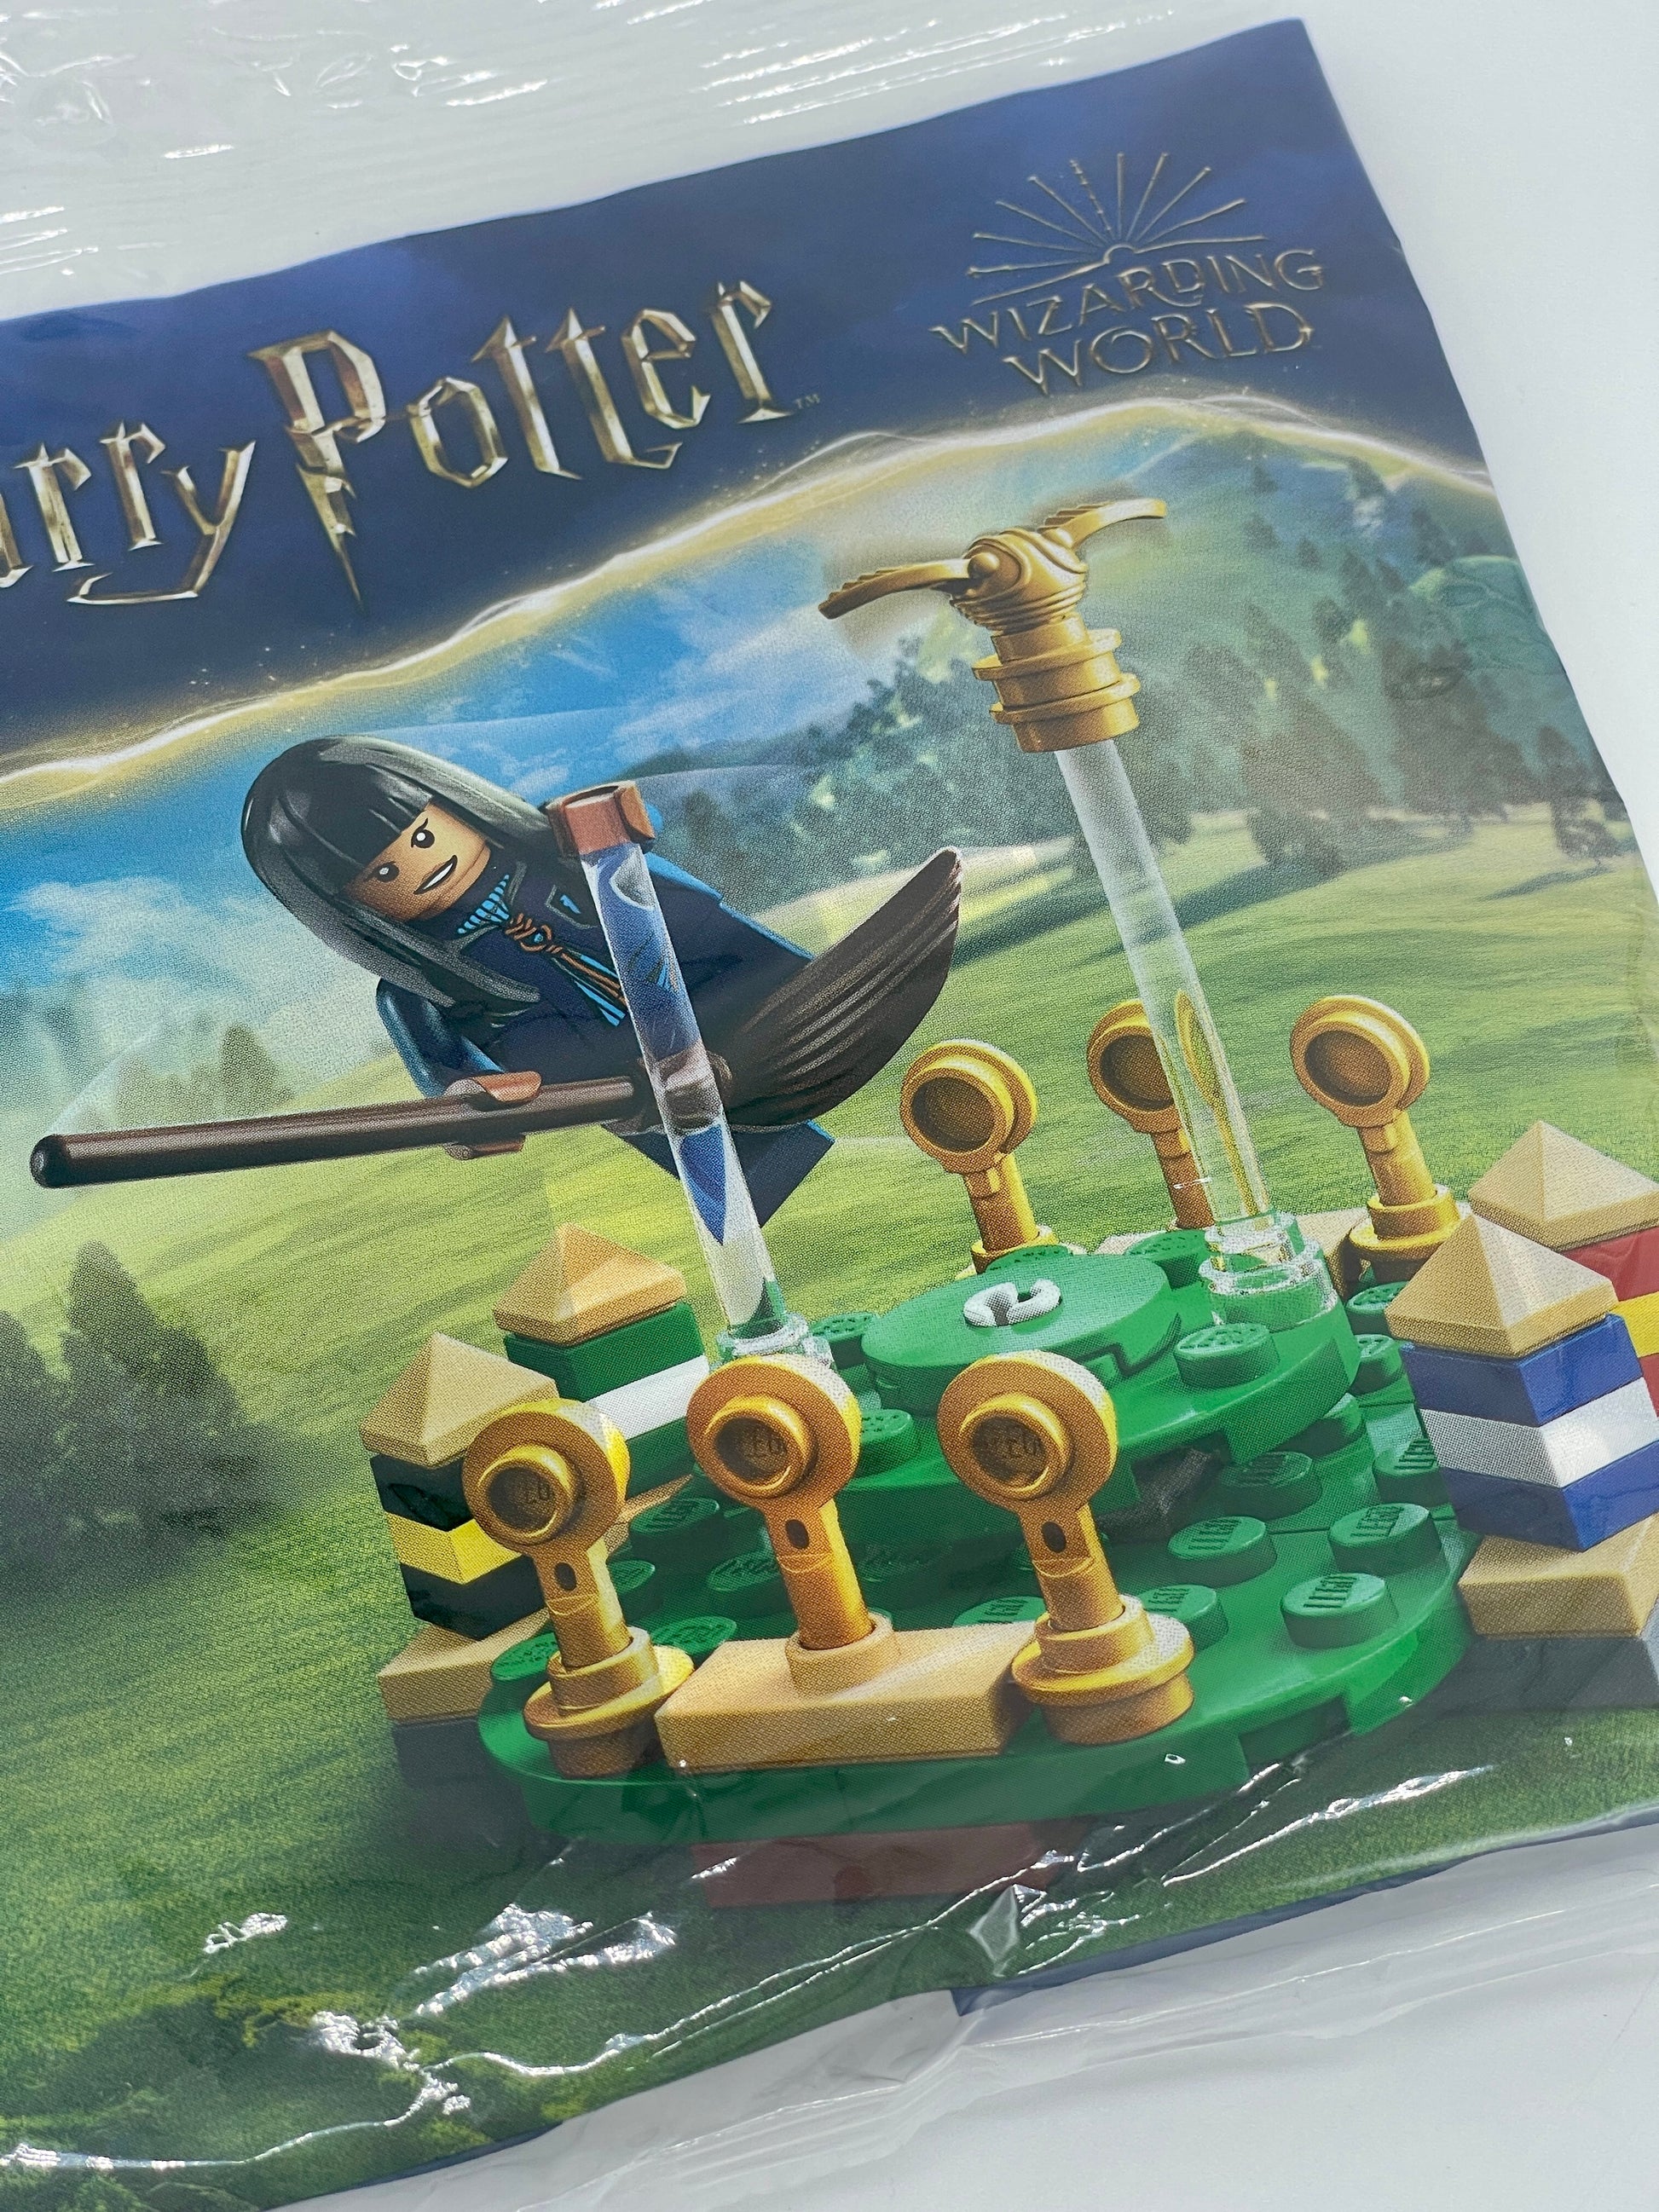 LEGO Harry Potter Quidditch Practice Polybag Set (30651) 